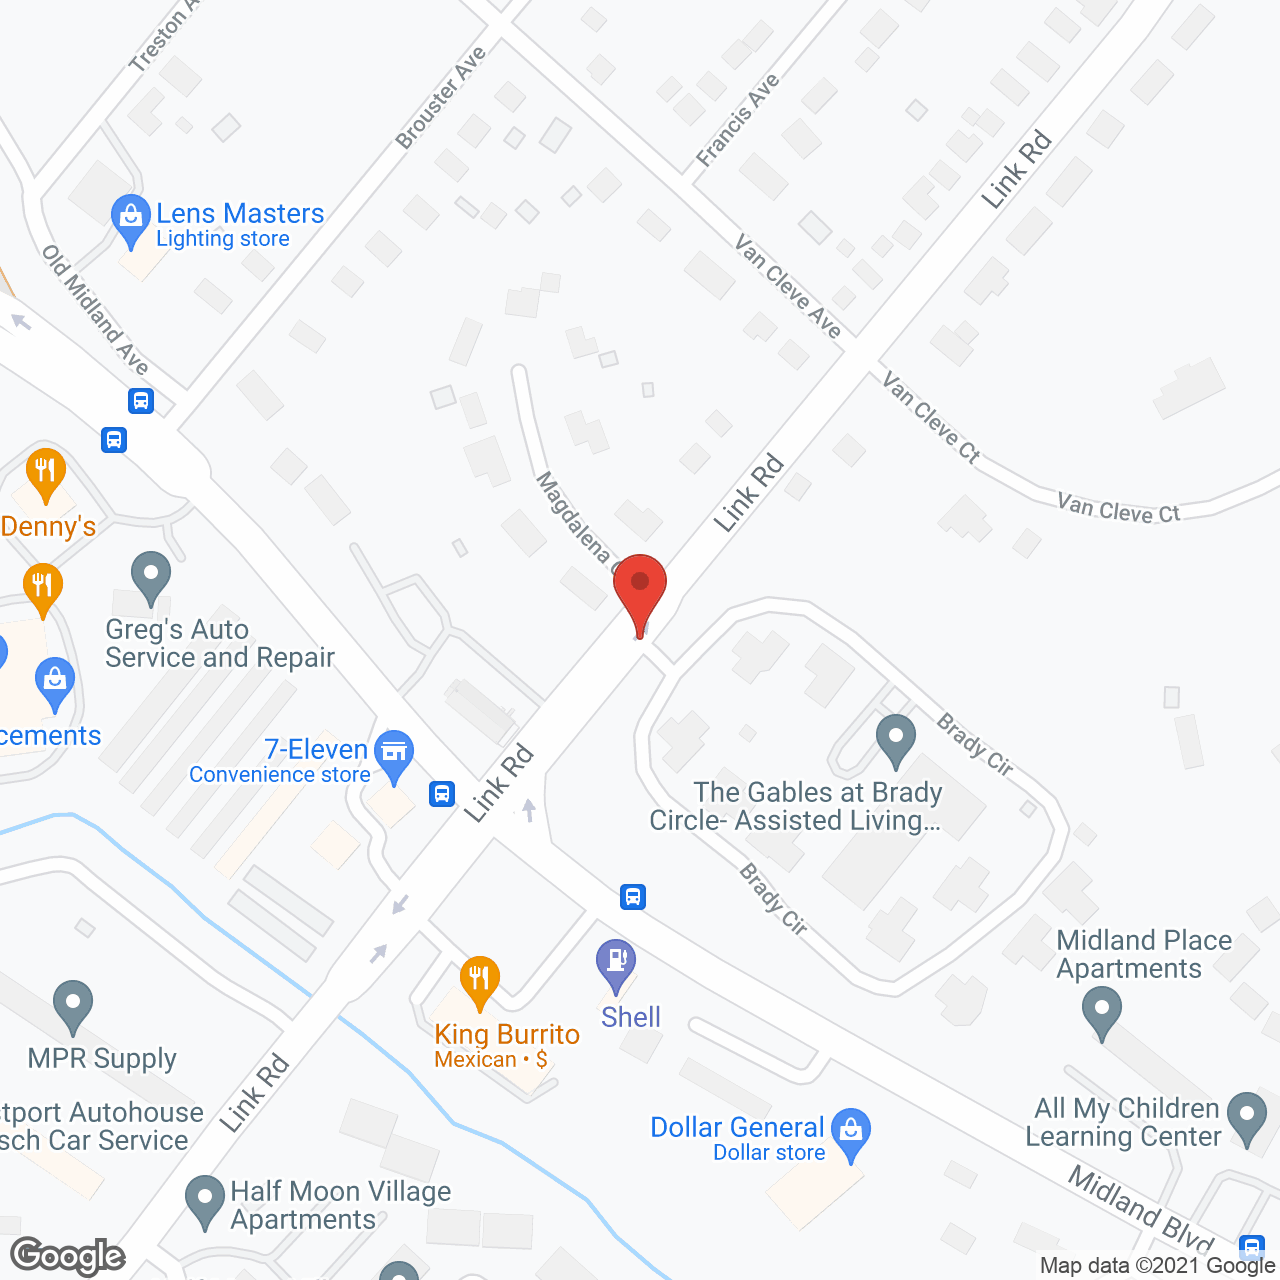 The Gables at Brady Circle in google map